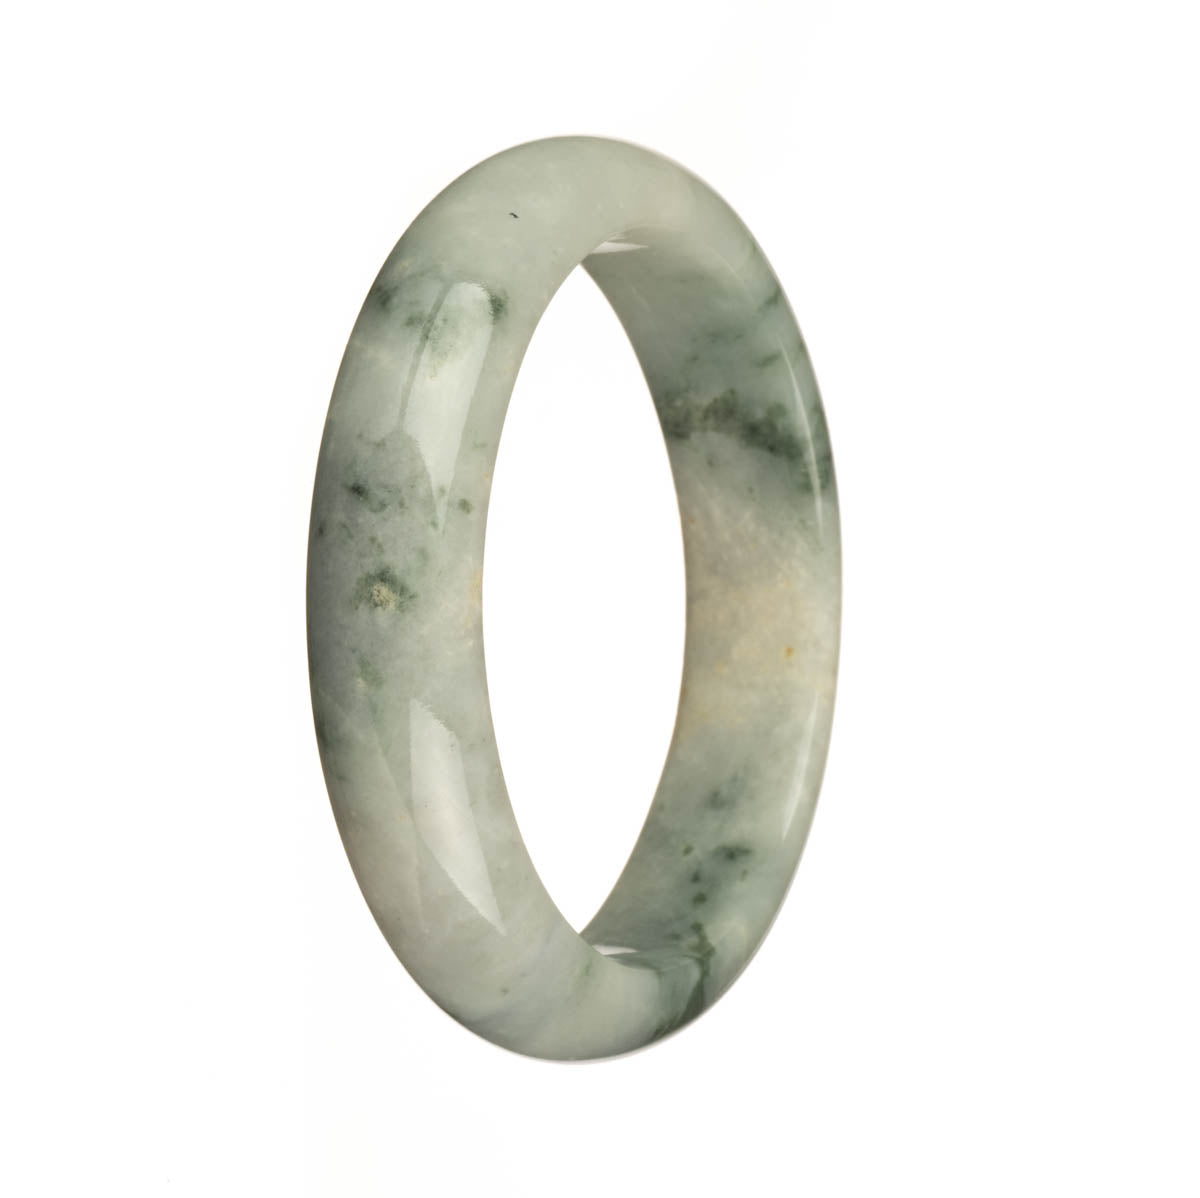 Authentic Type A White with Green Pattren Burmese Jade Bangle Bracelet - 58mm Half Moon